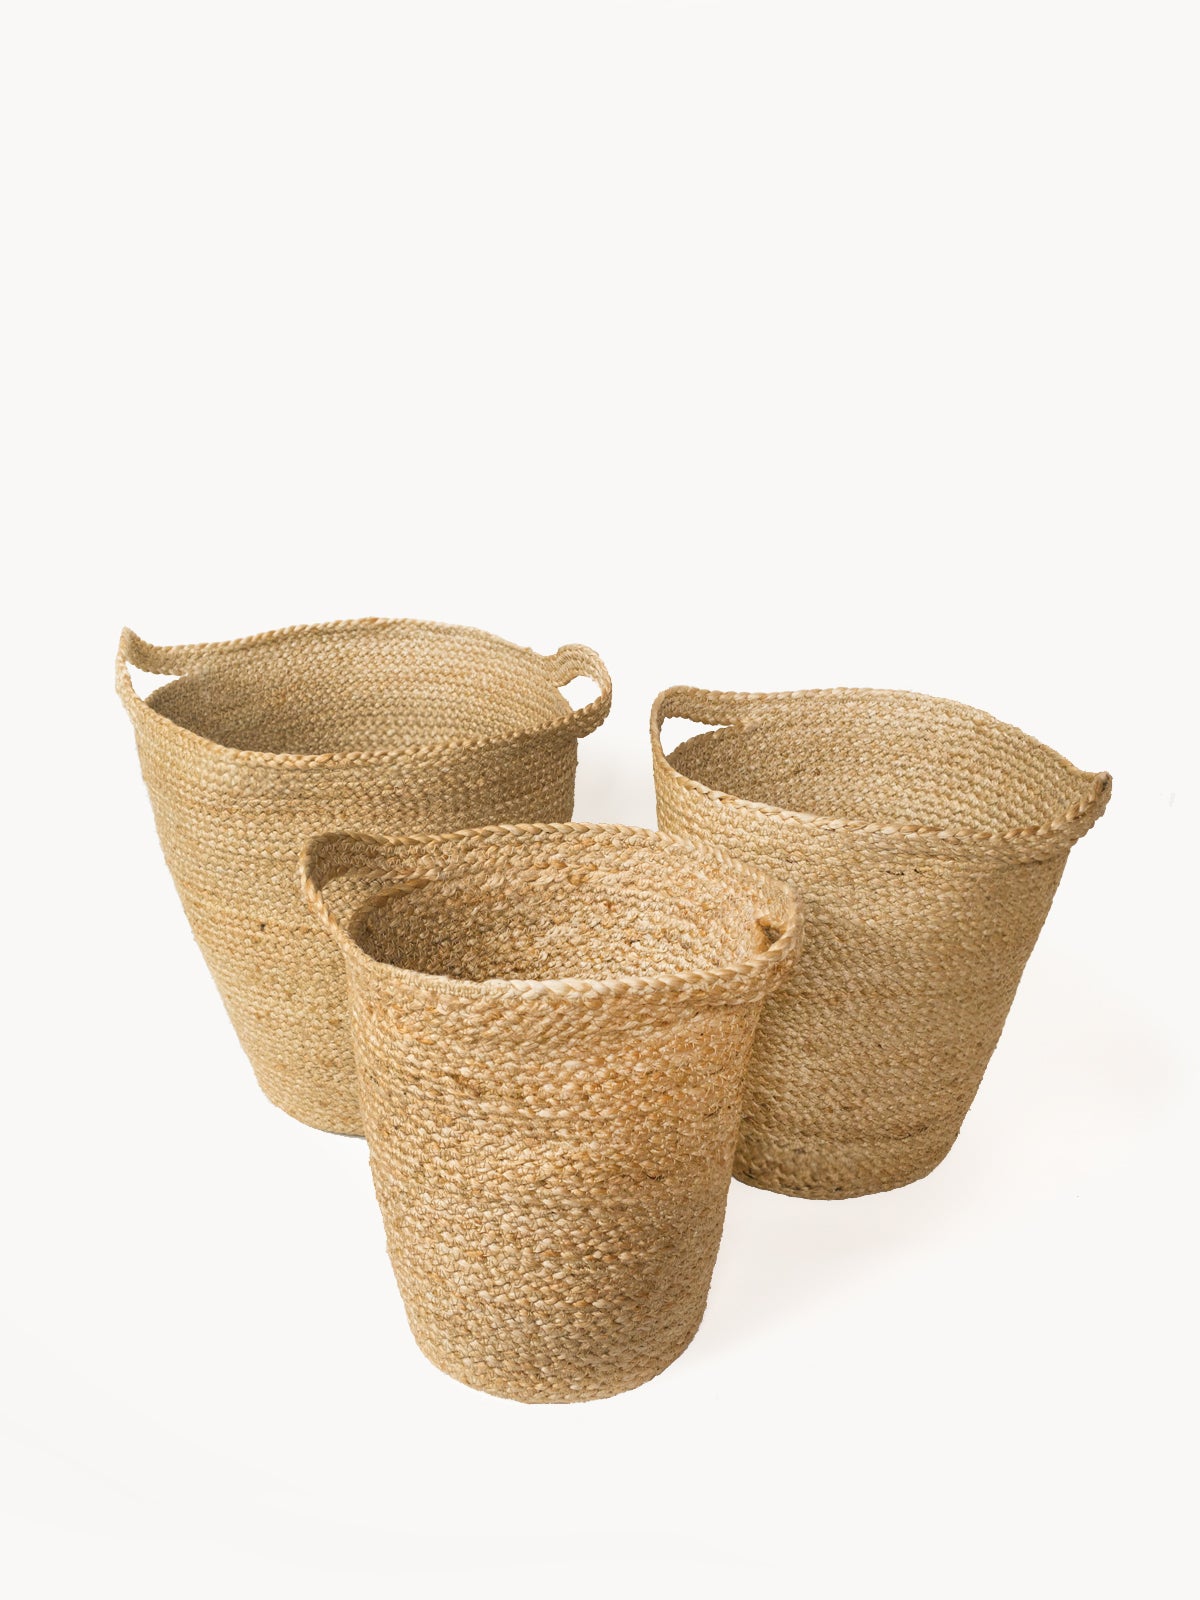 Kata Basket with Slit Handles - Three Sizes